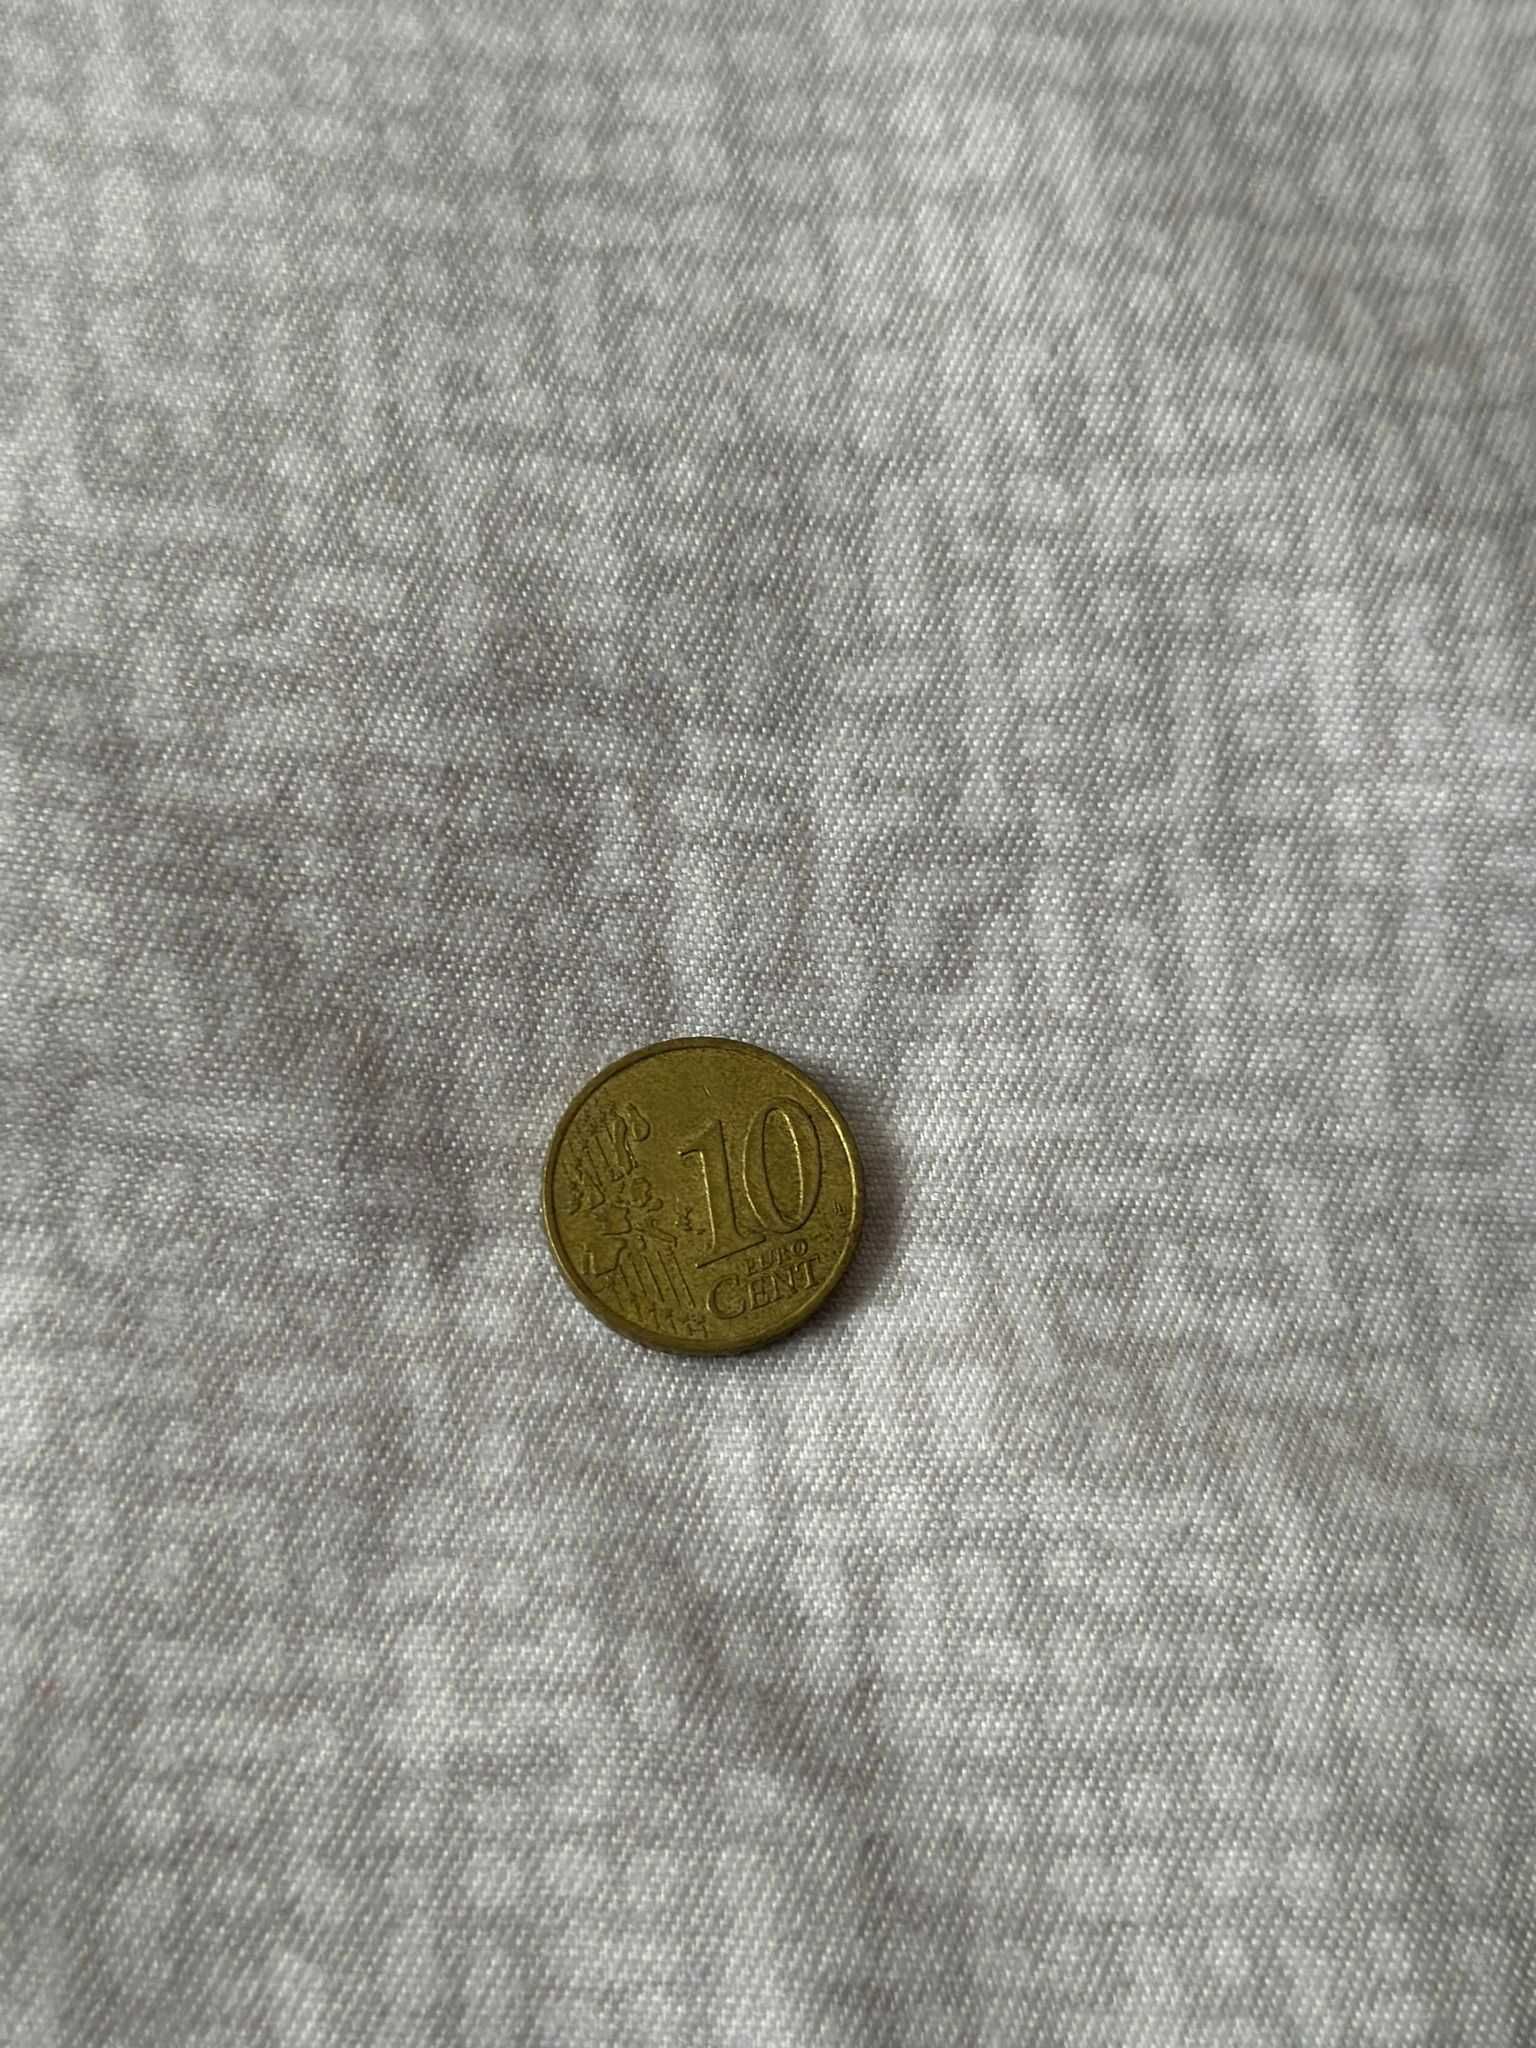 10 euro cent din 2000